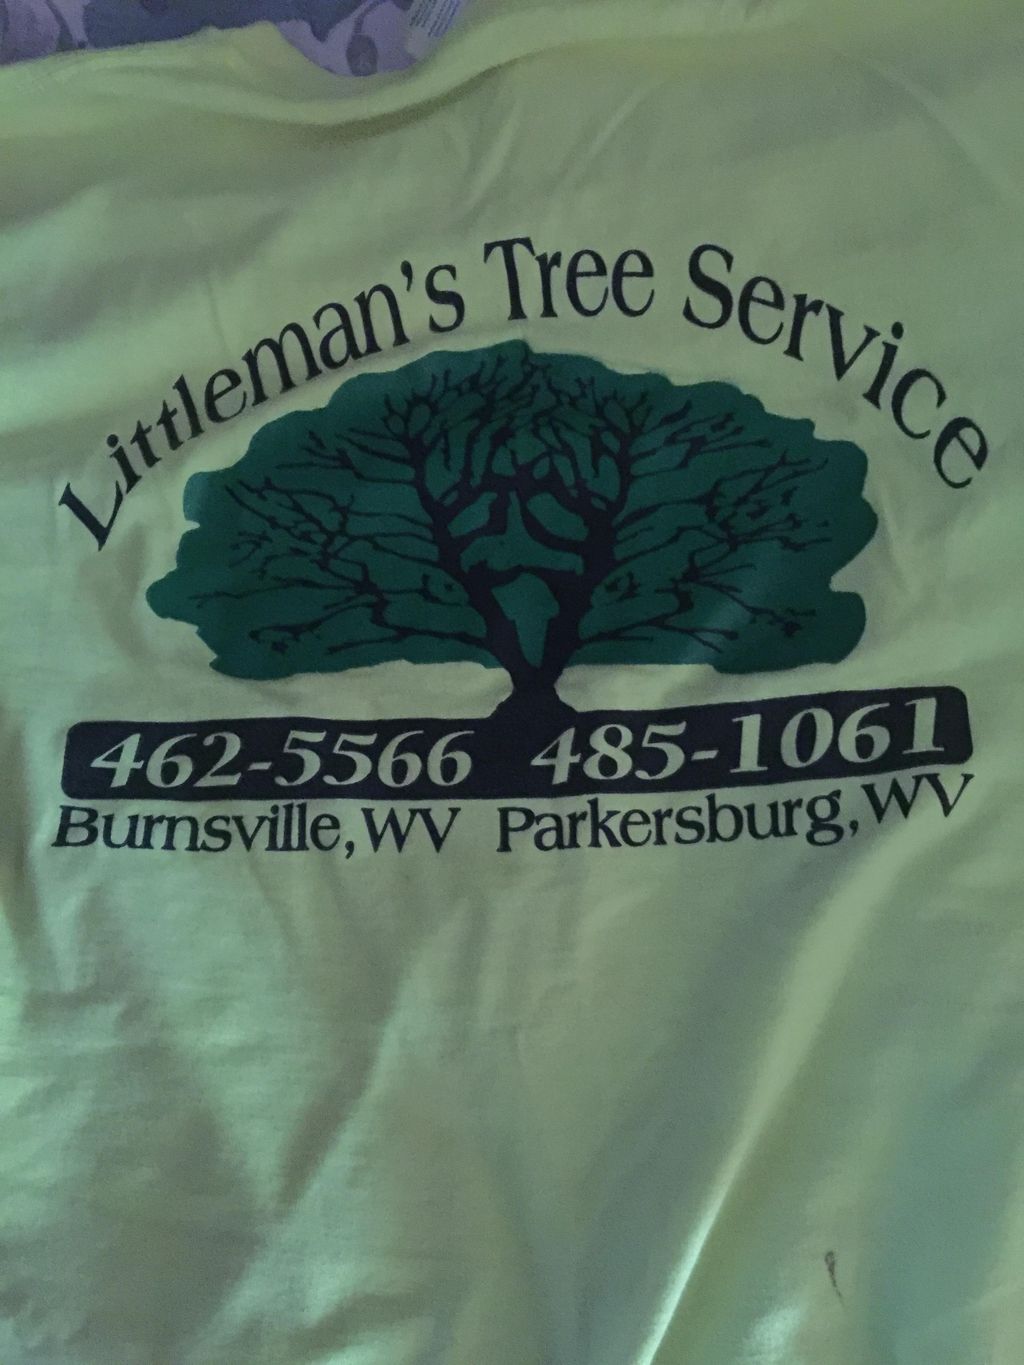 Little mans tree service